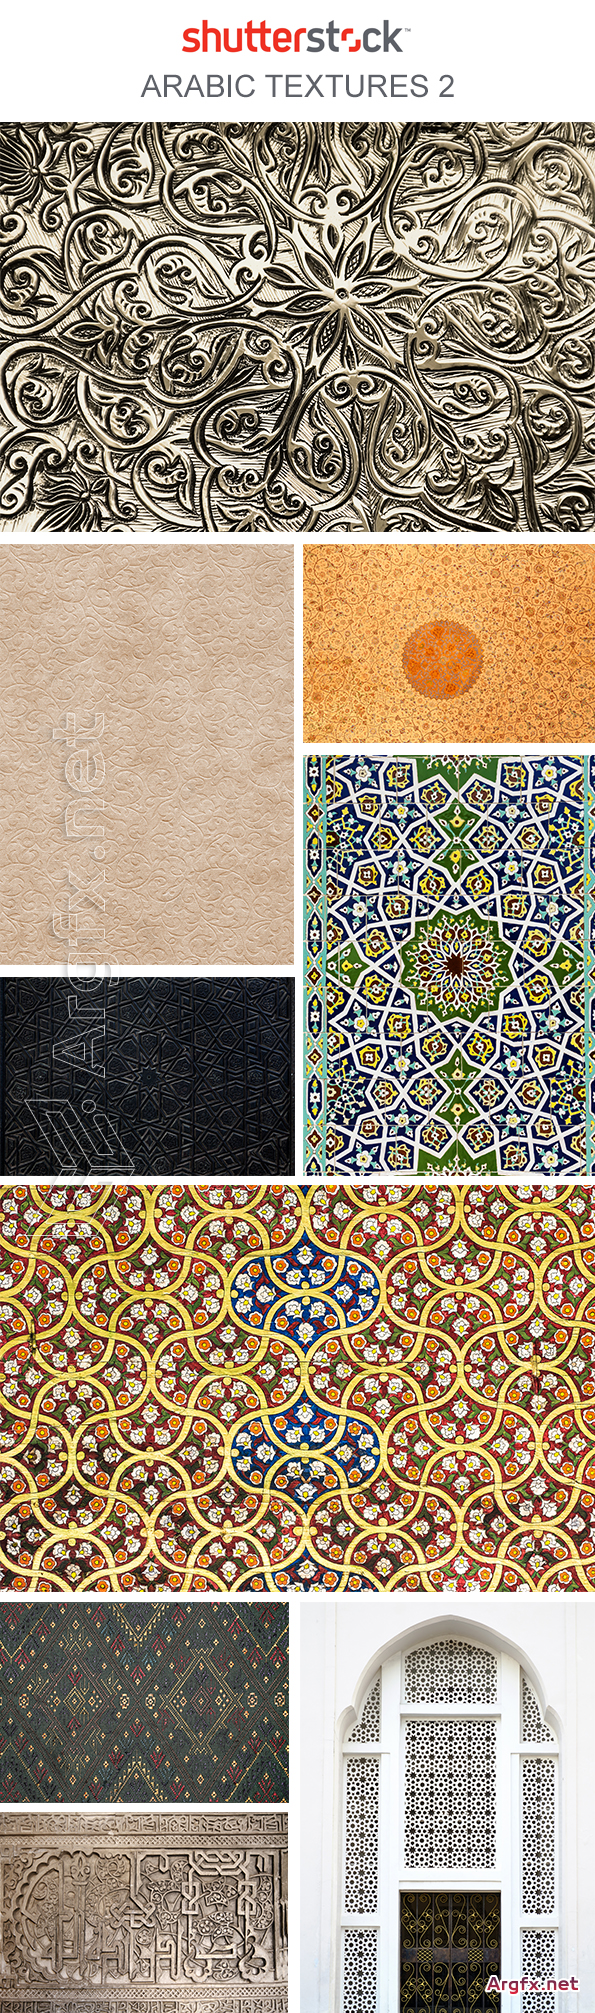 Amazing SS - Arabic Textures 2, 25xJPGs